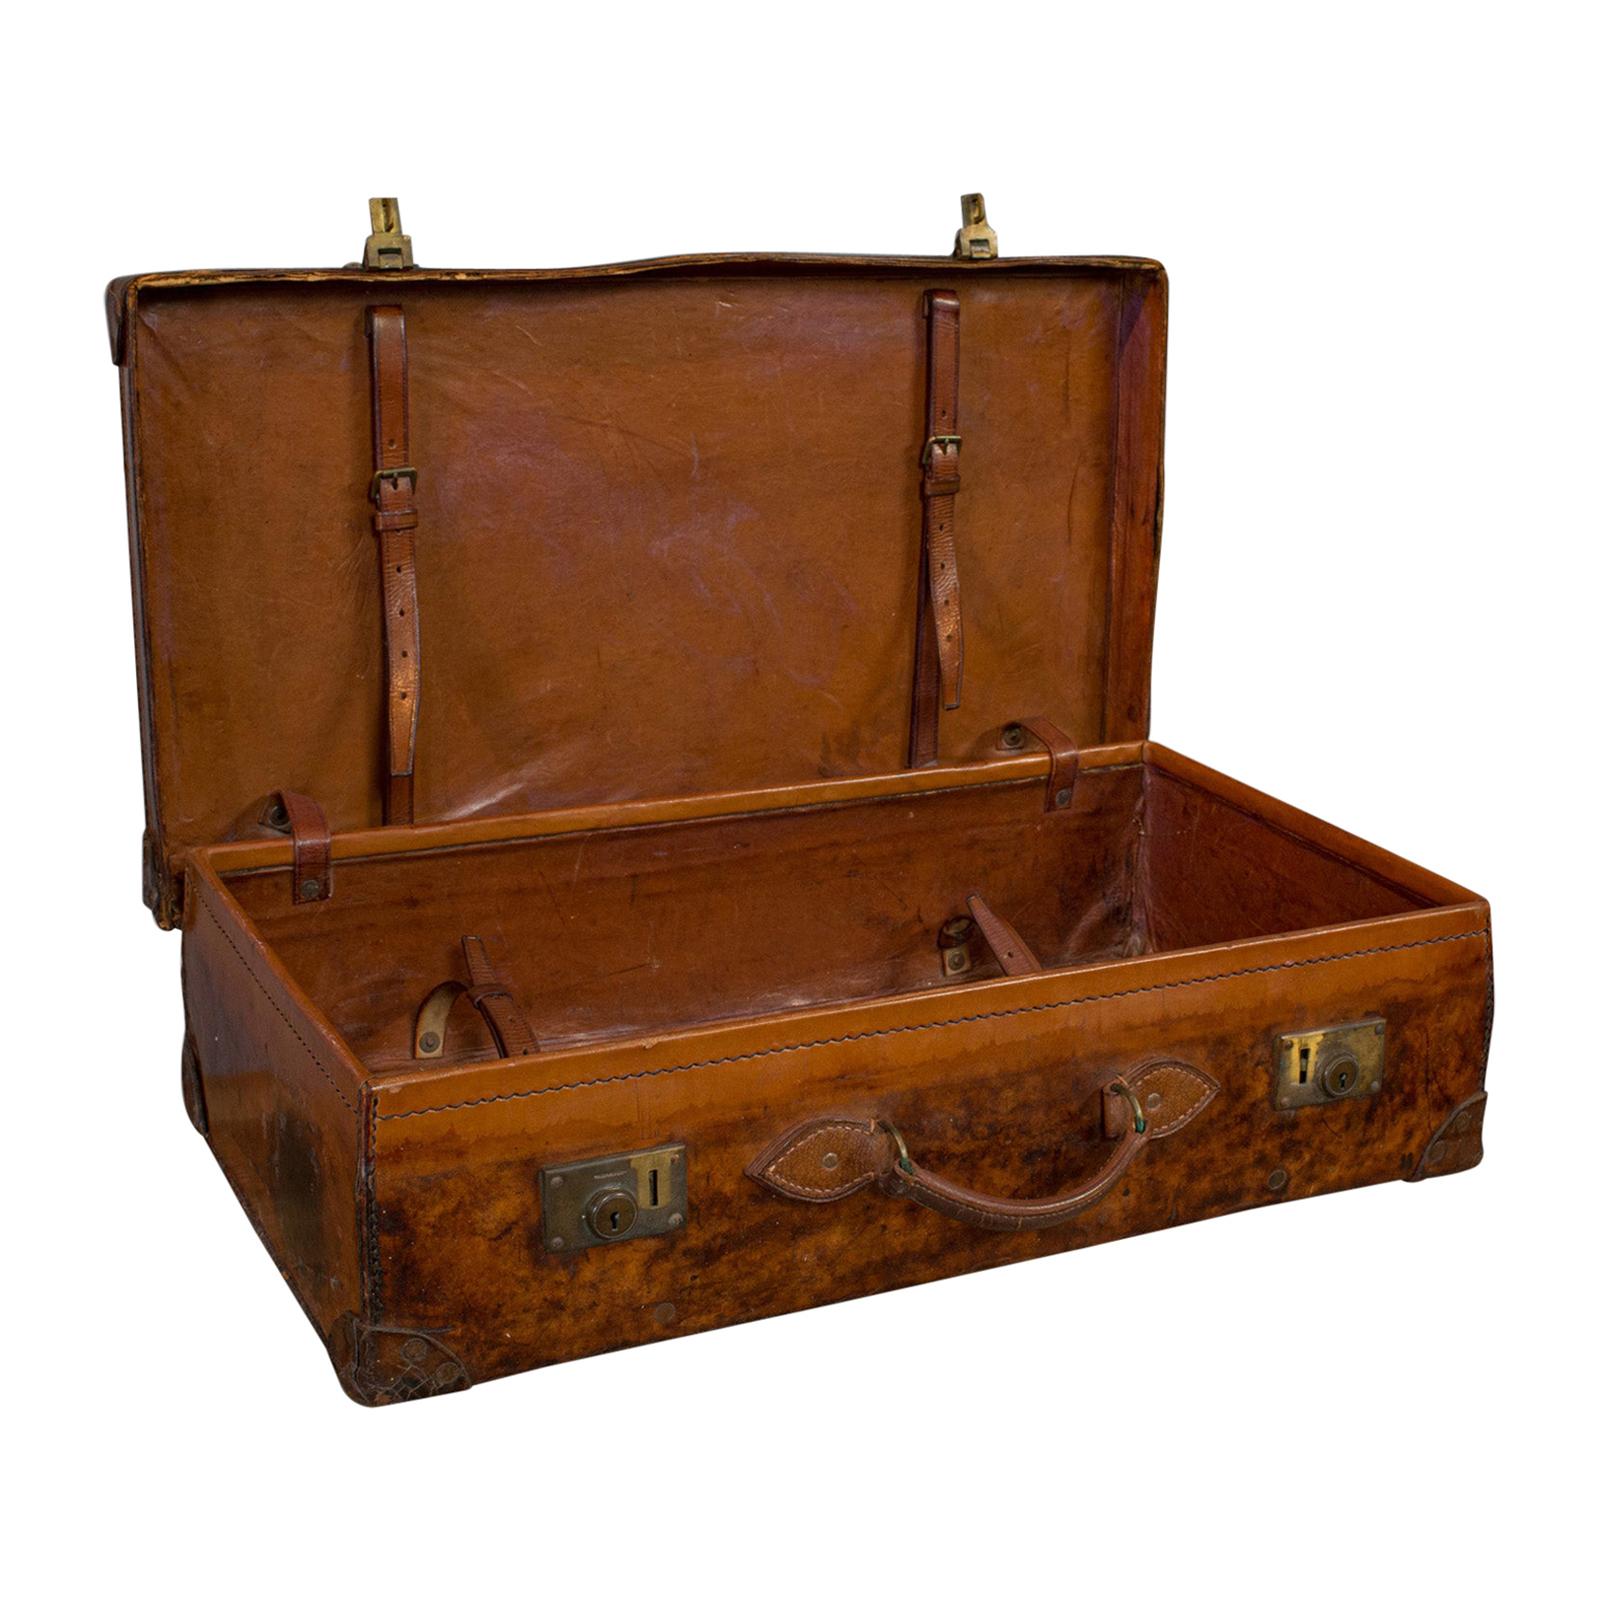 Antique Travel Suitcase English, Leather, Gentleman’s Case, Edwardian circa 1910